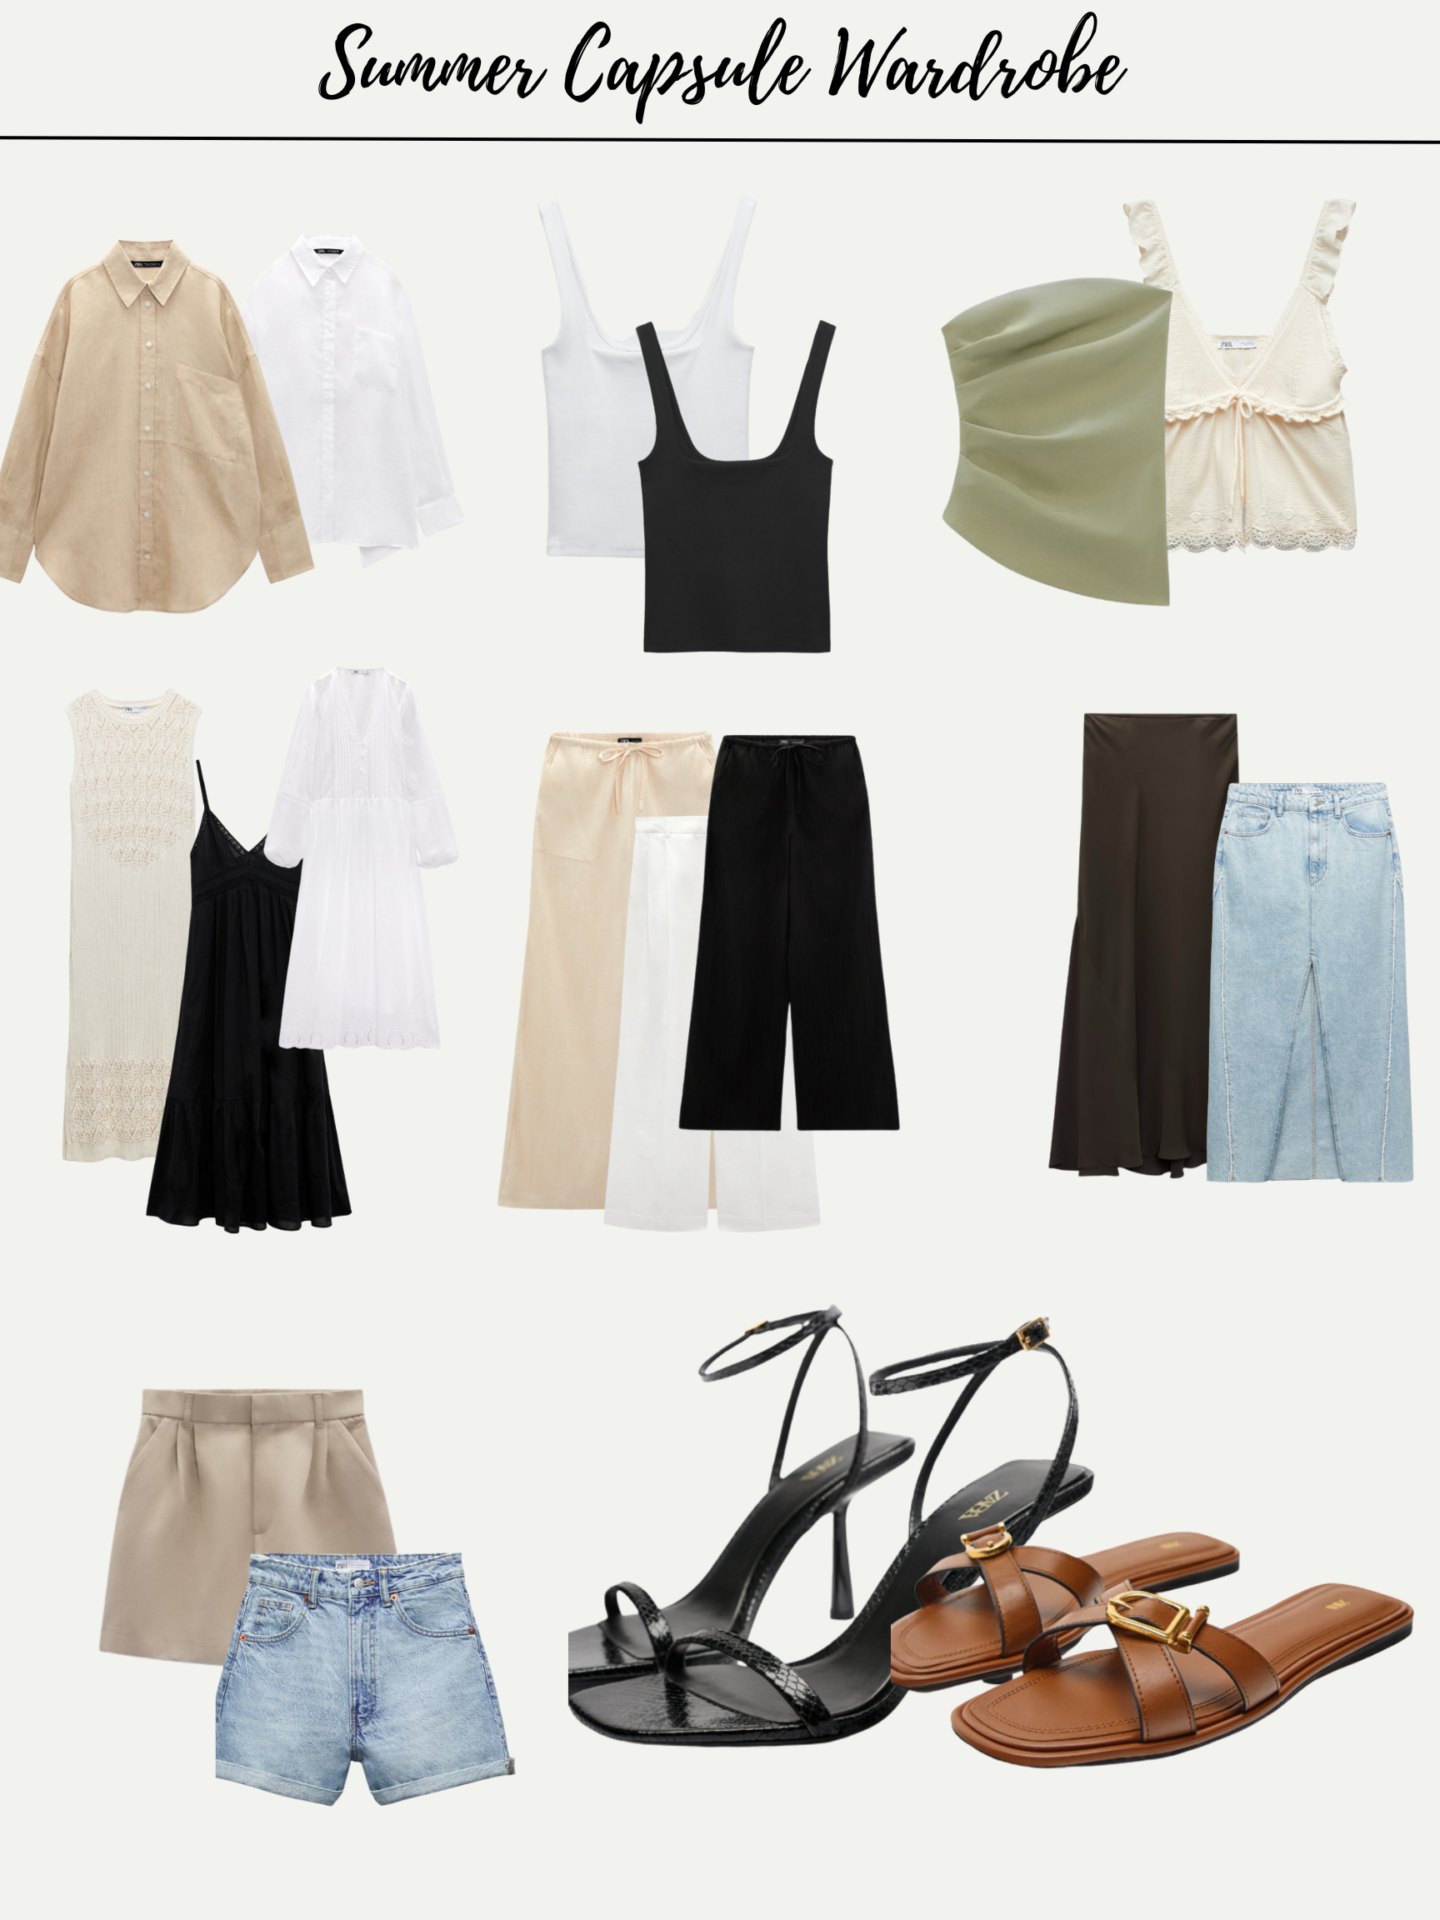 Summer Capsule Wardrobe from Zara » Stutilicious